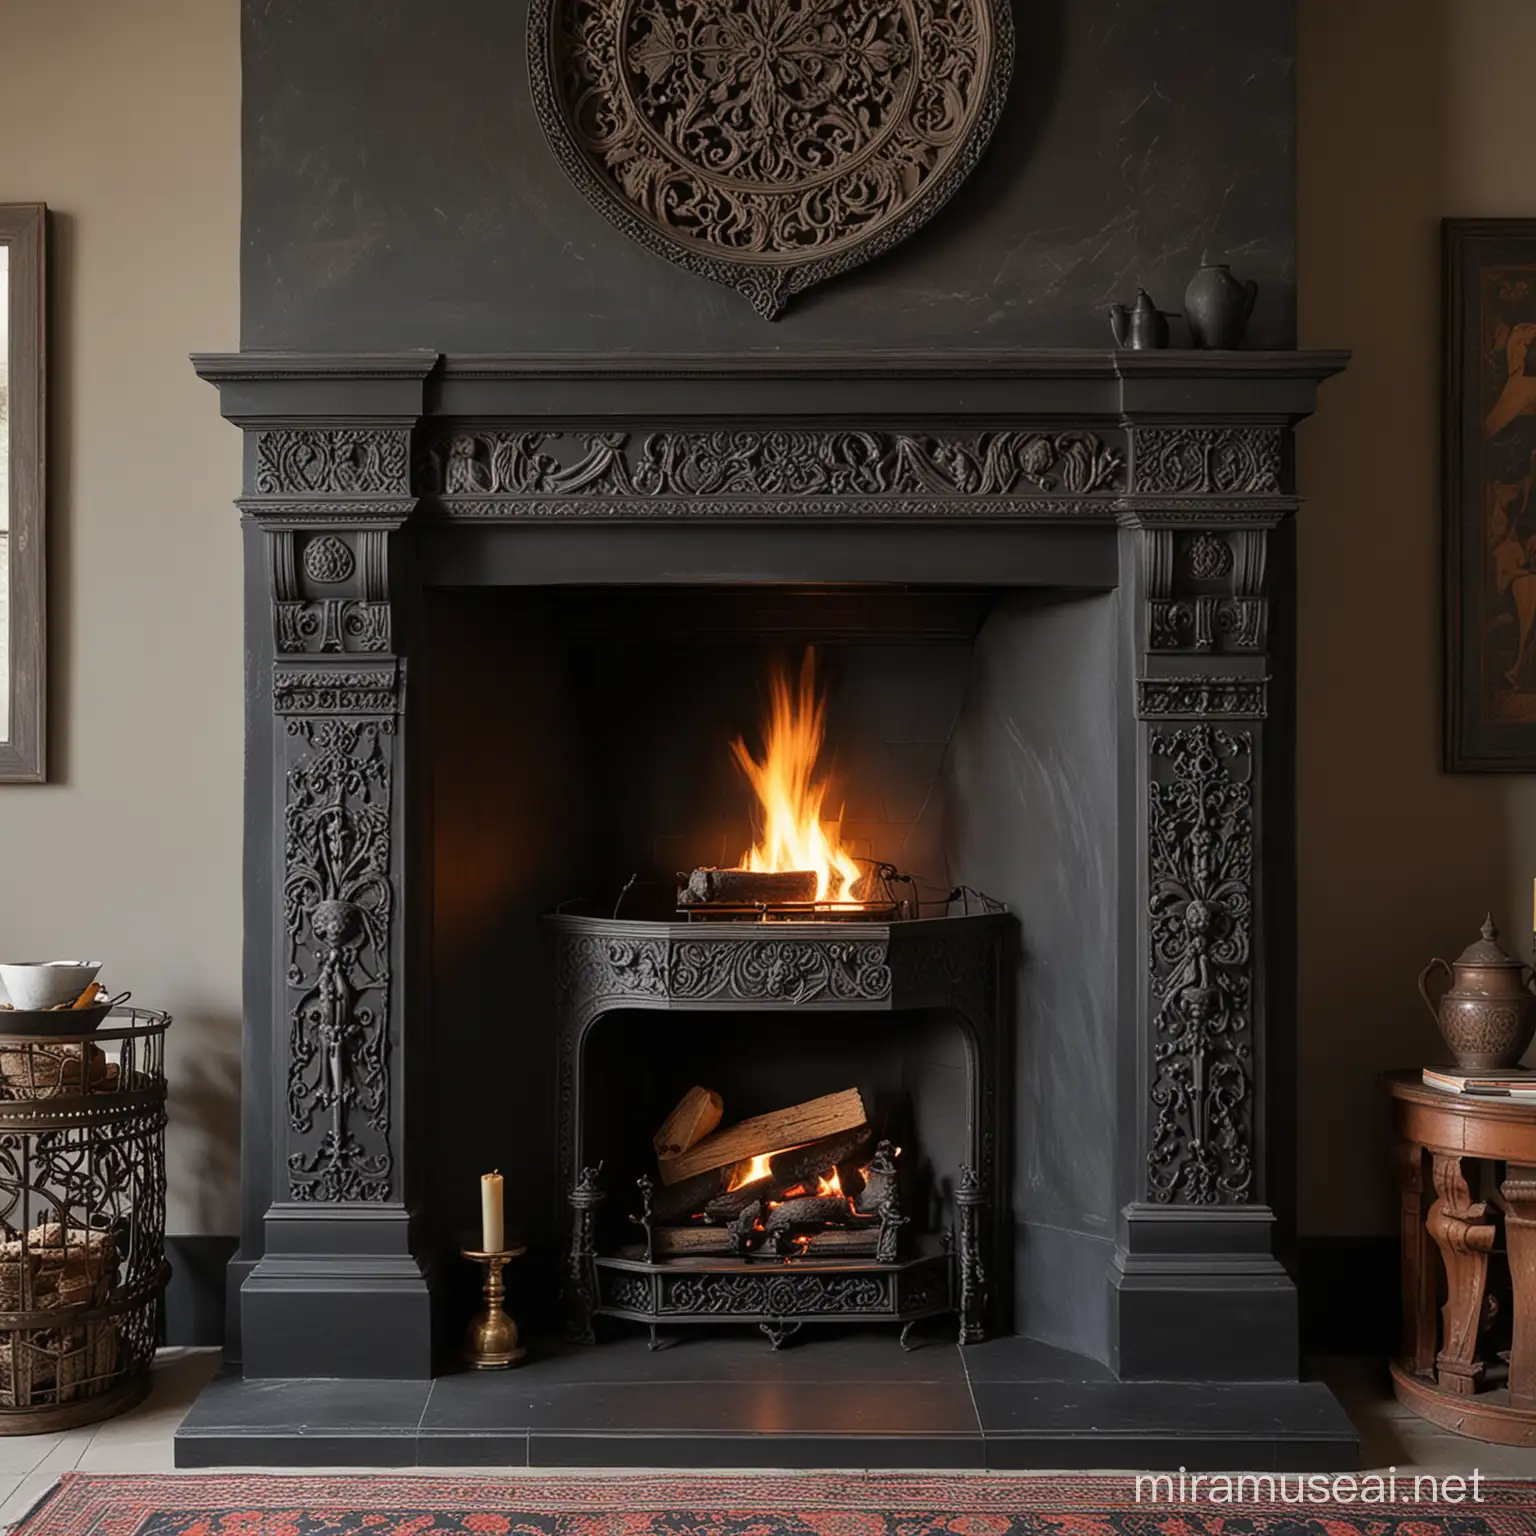 Dark Medieval Fireplace with Intricate Motifs